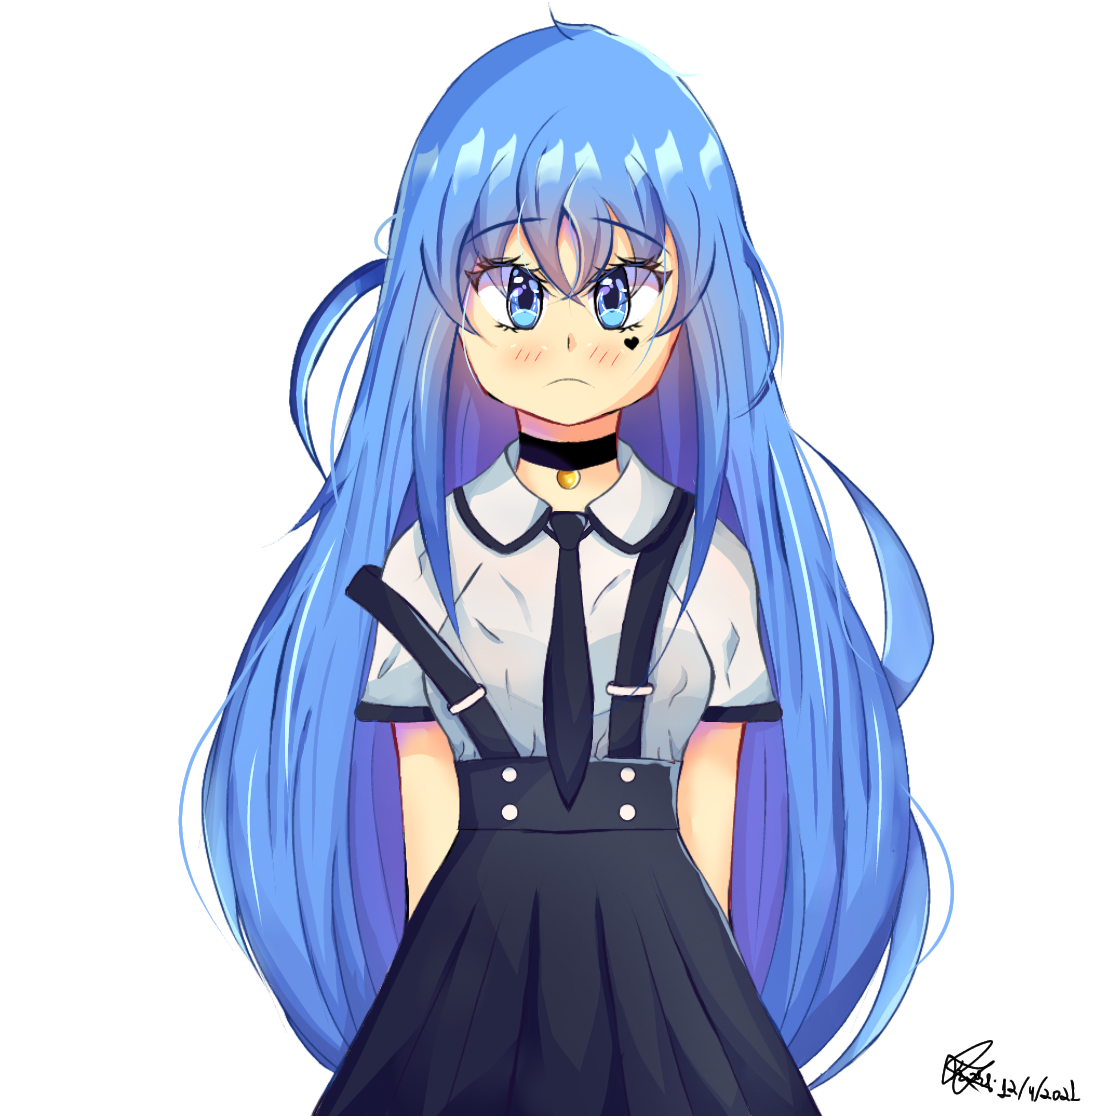 Anime Girls With Blue Hair Meme 2. by brandonale on DeviantArt